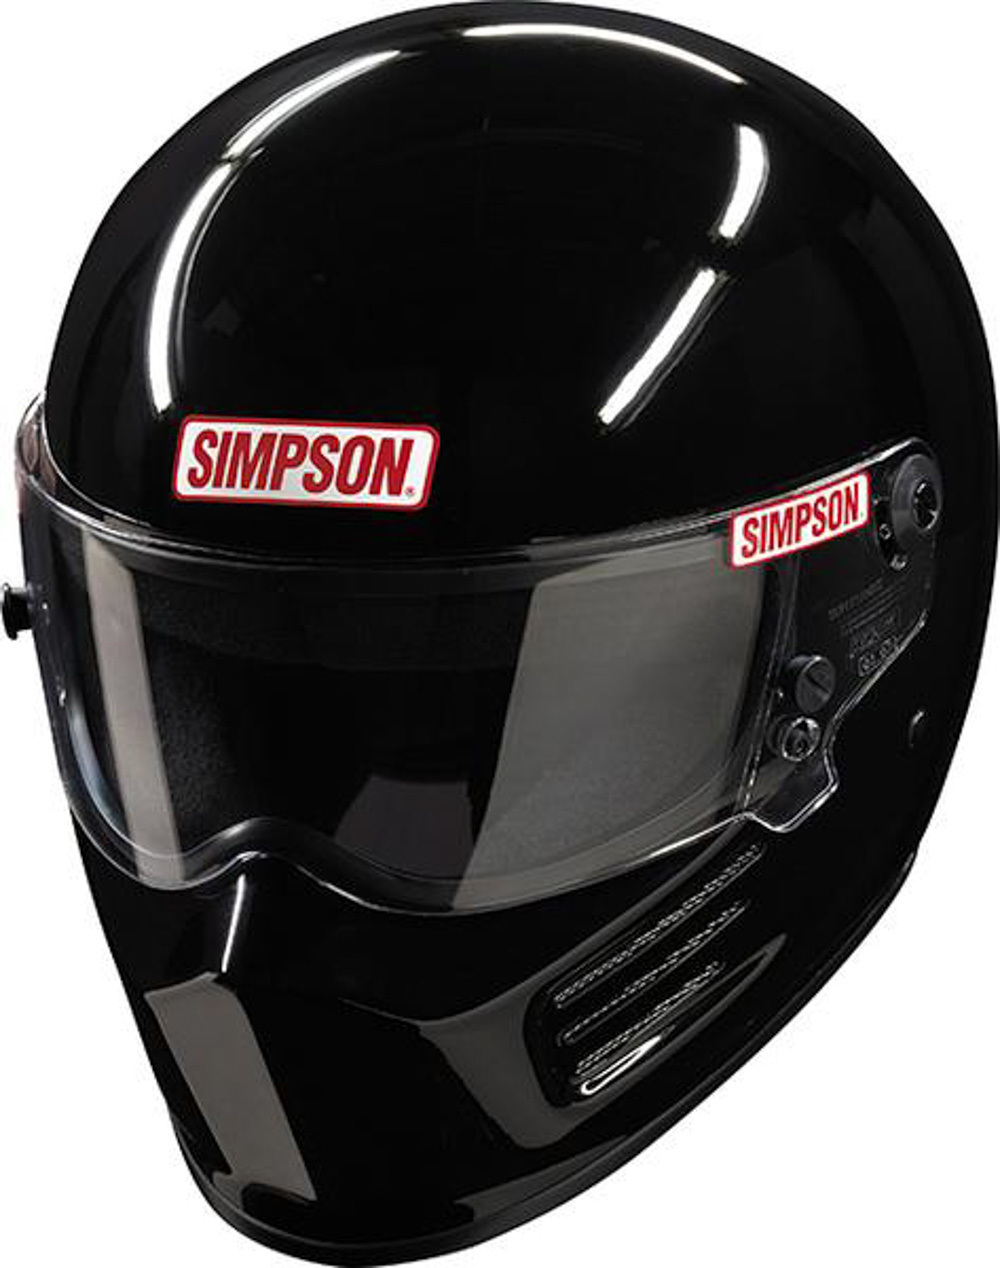 Helmet - Bandit - Snell SA2020 - Head and Neck Support Ready - Black - Medium - Each